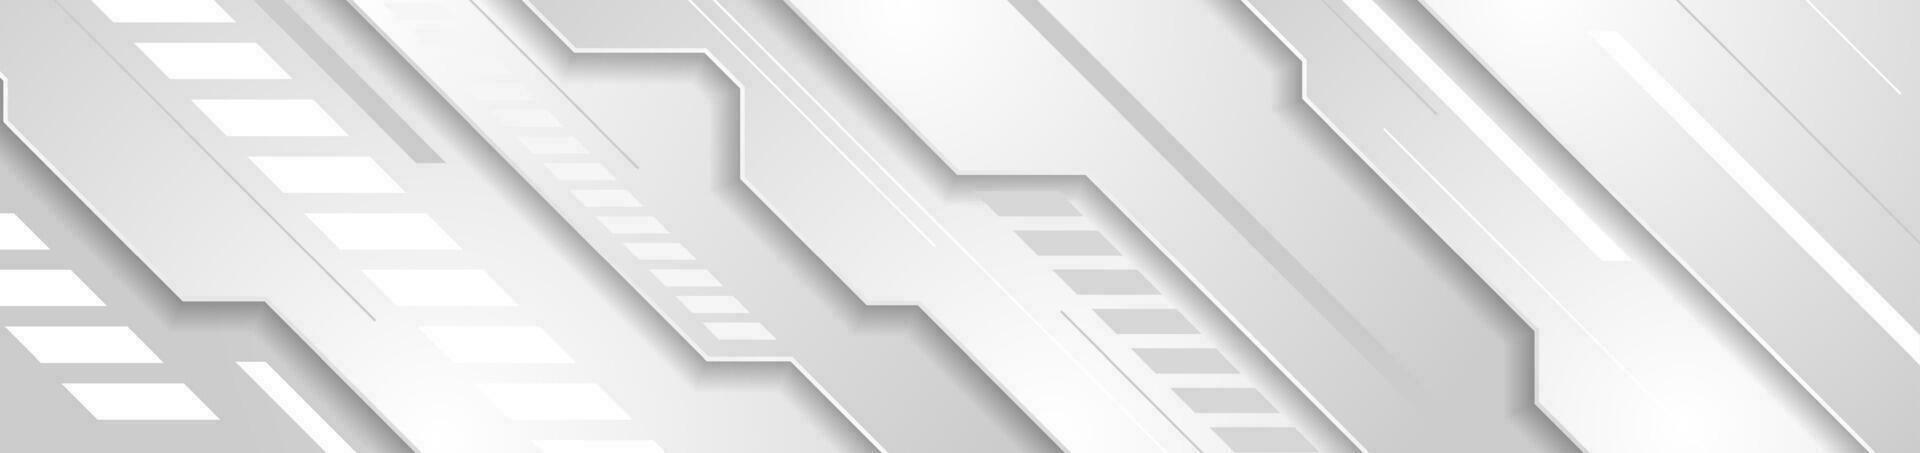 Grey abstract tech geometric banner design vector